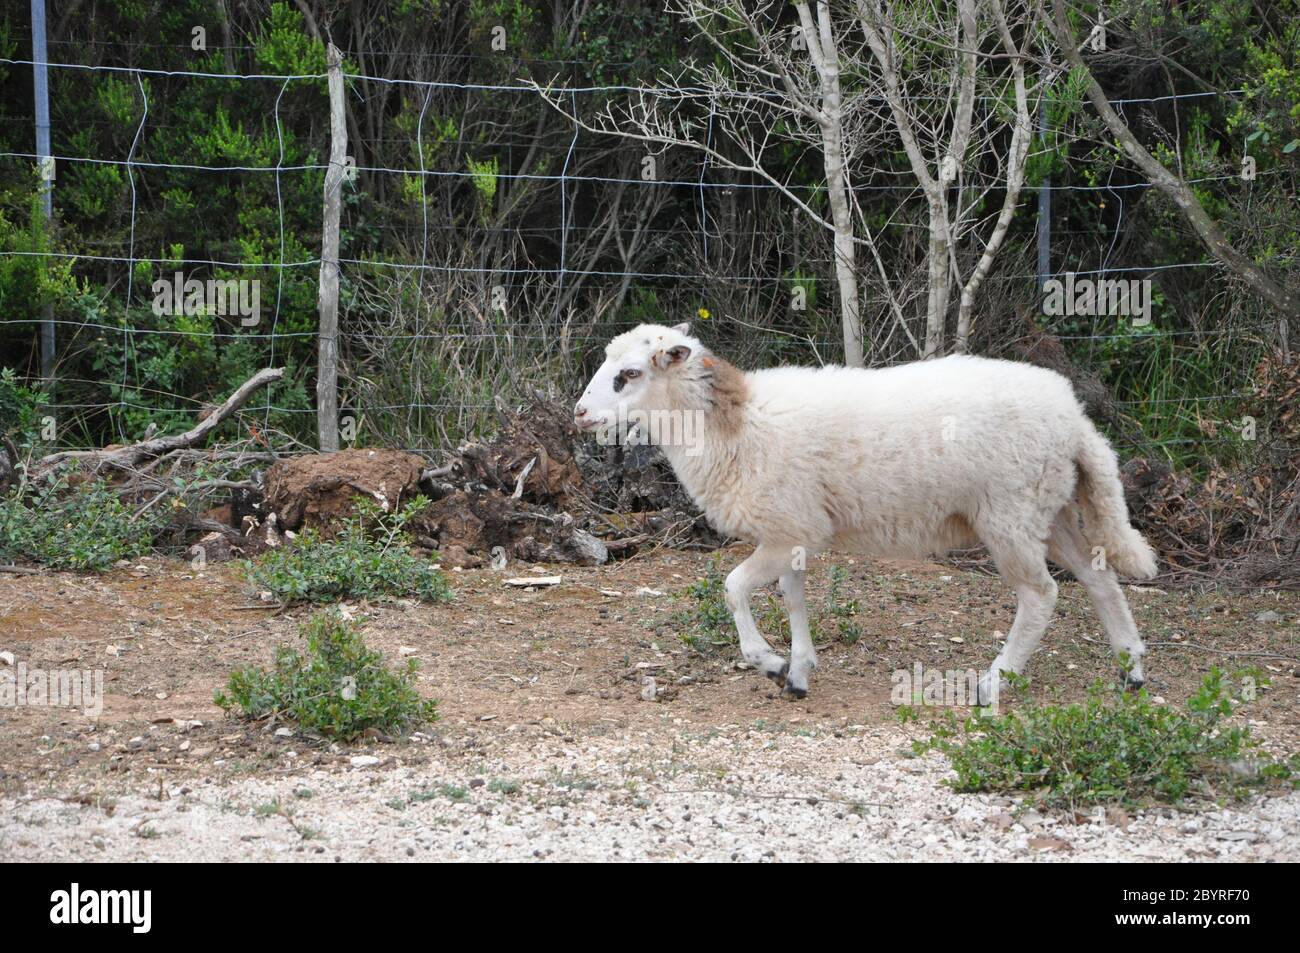 Croatian baby sheep running on the grass Stock Photo